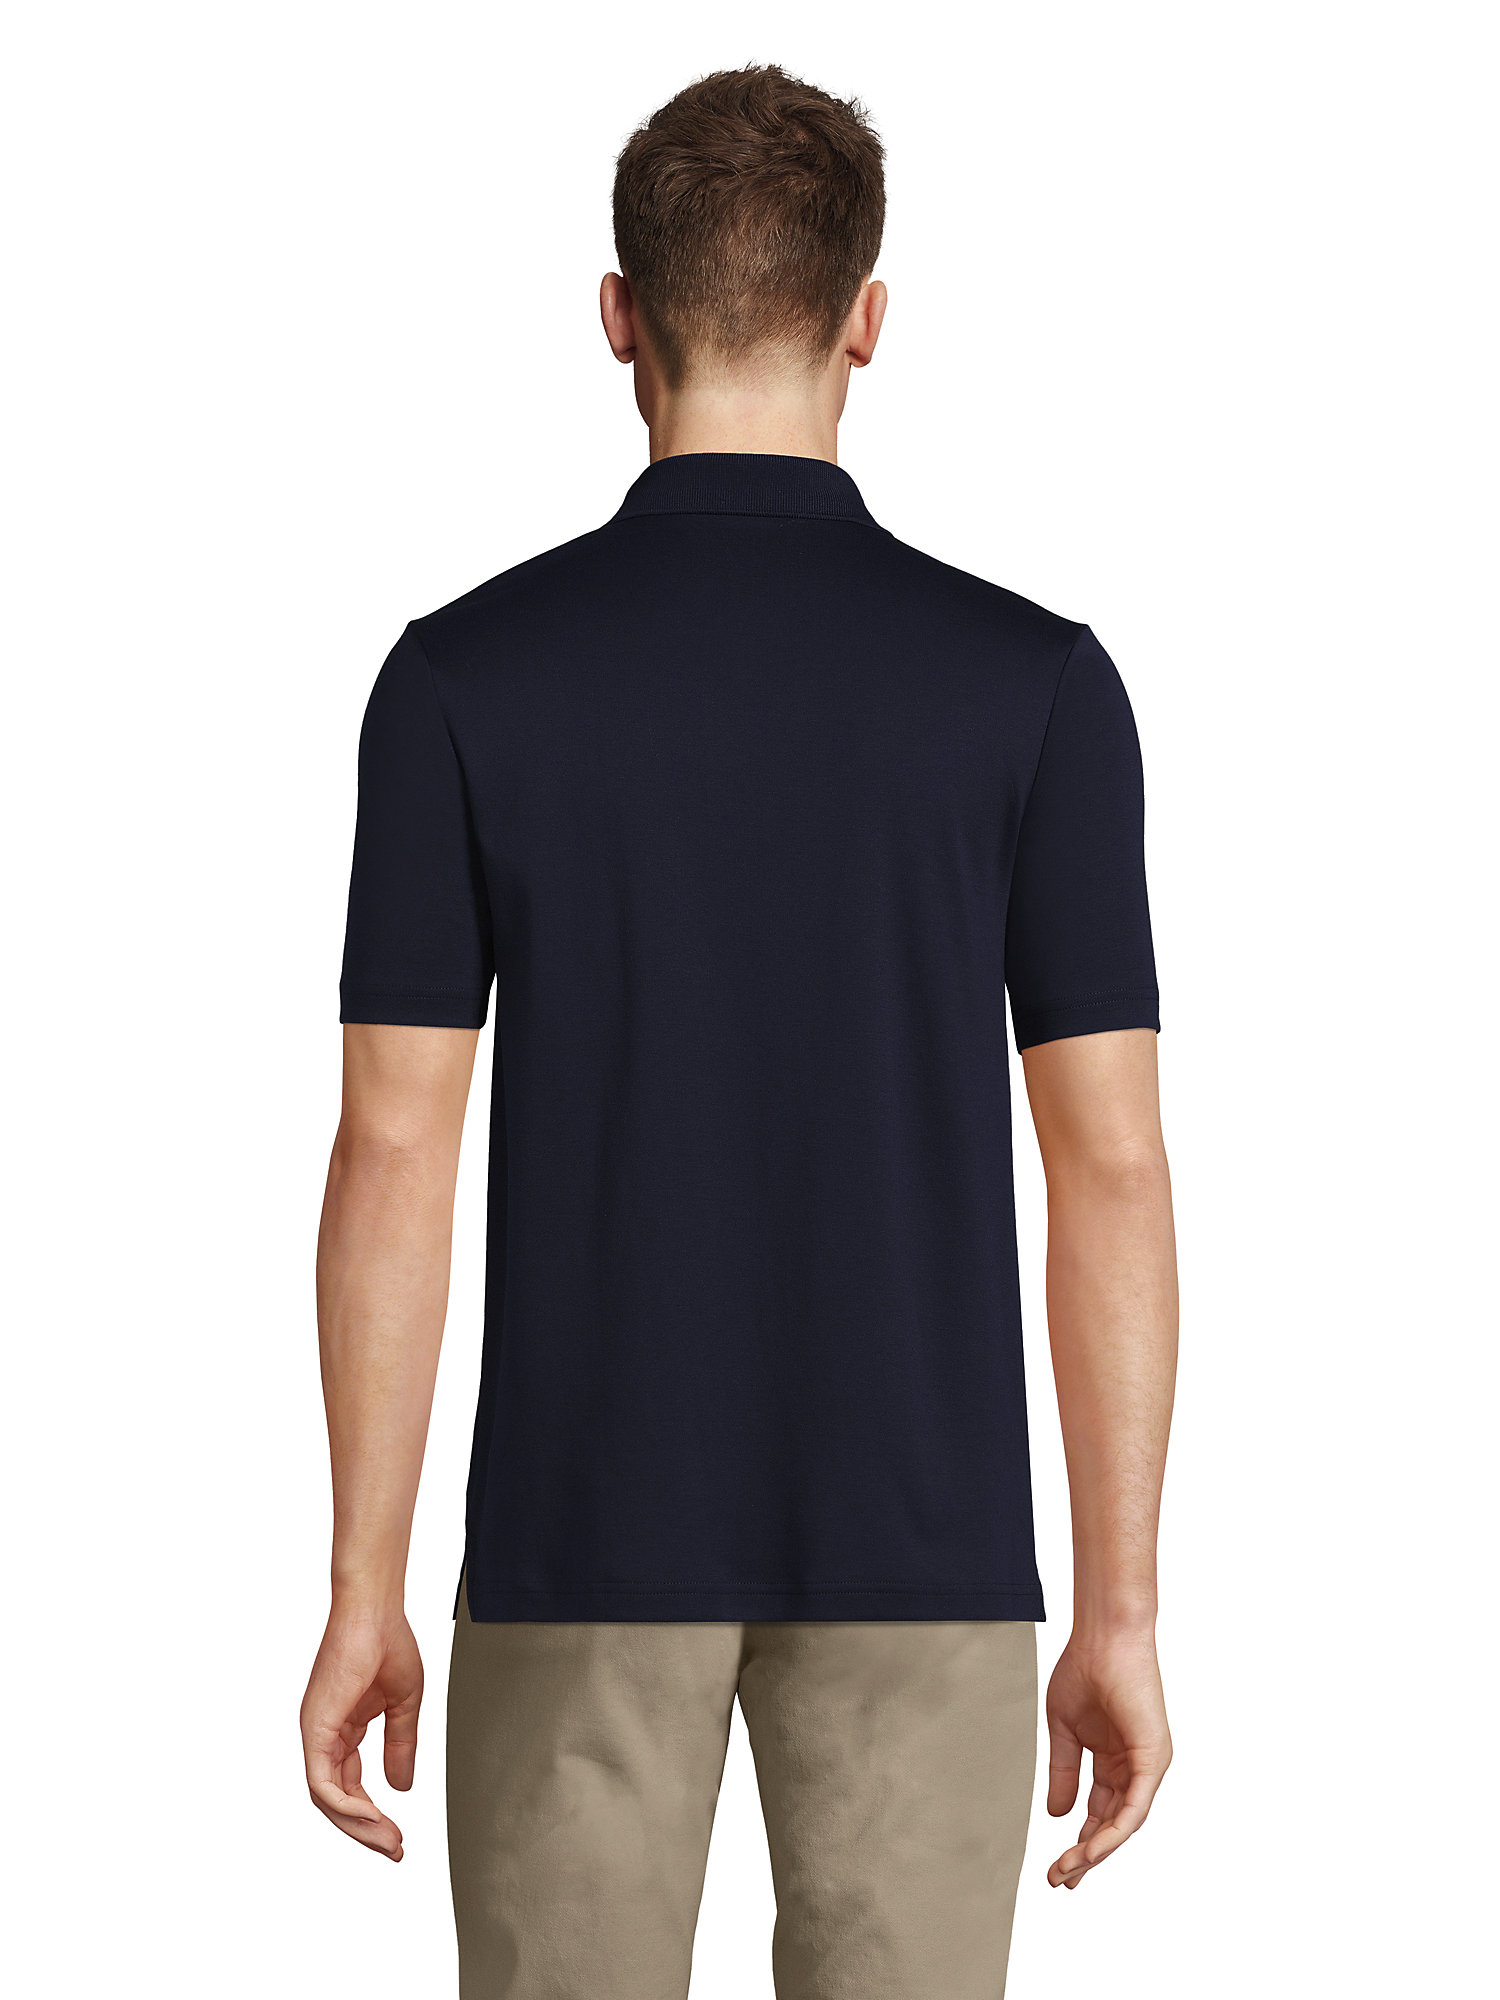 Lands' End Men's Short Sleeve Super Soft Supima Polo Shirt with Pocket 